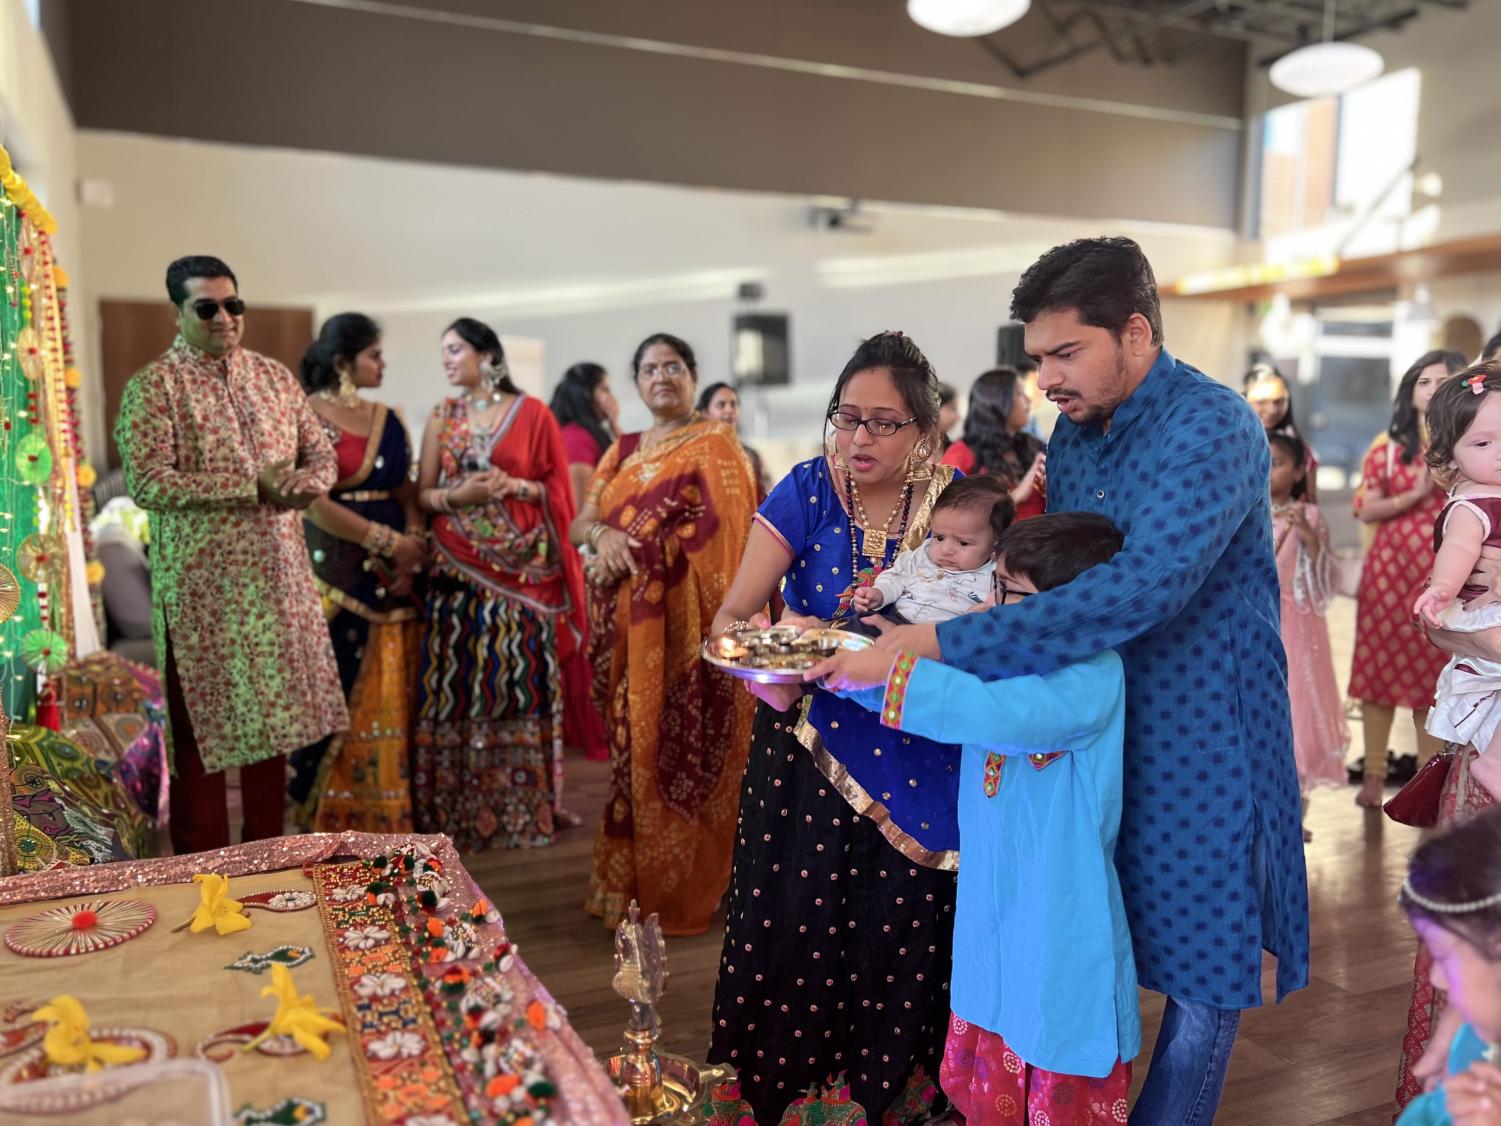 Indian+communities+around+the+world+celebrate+Navratri